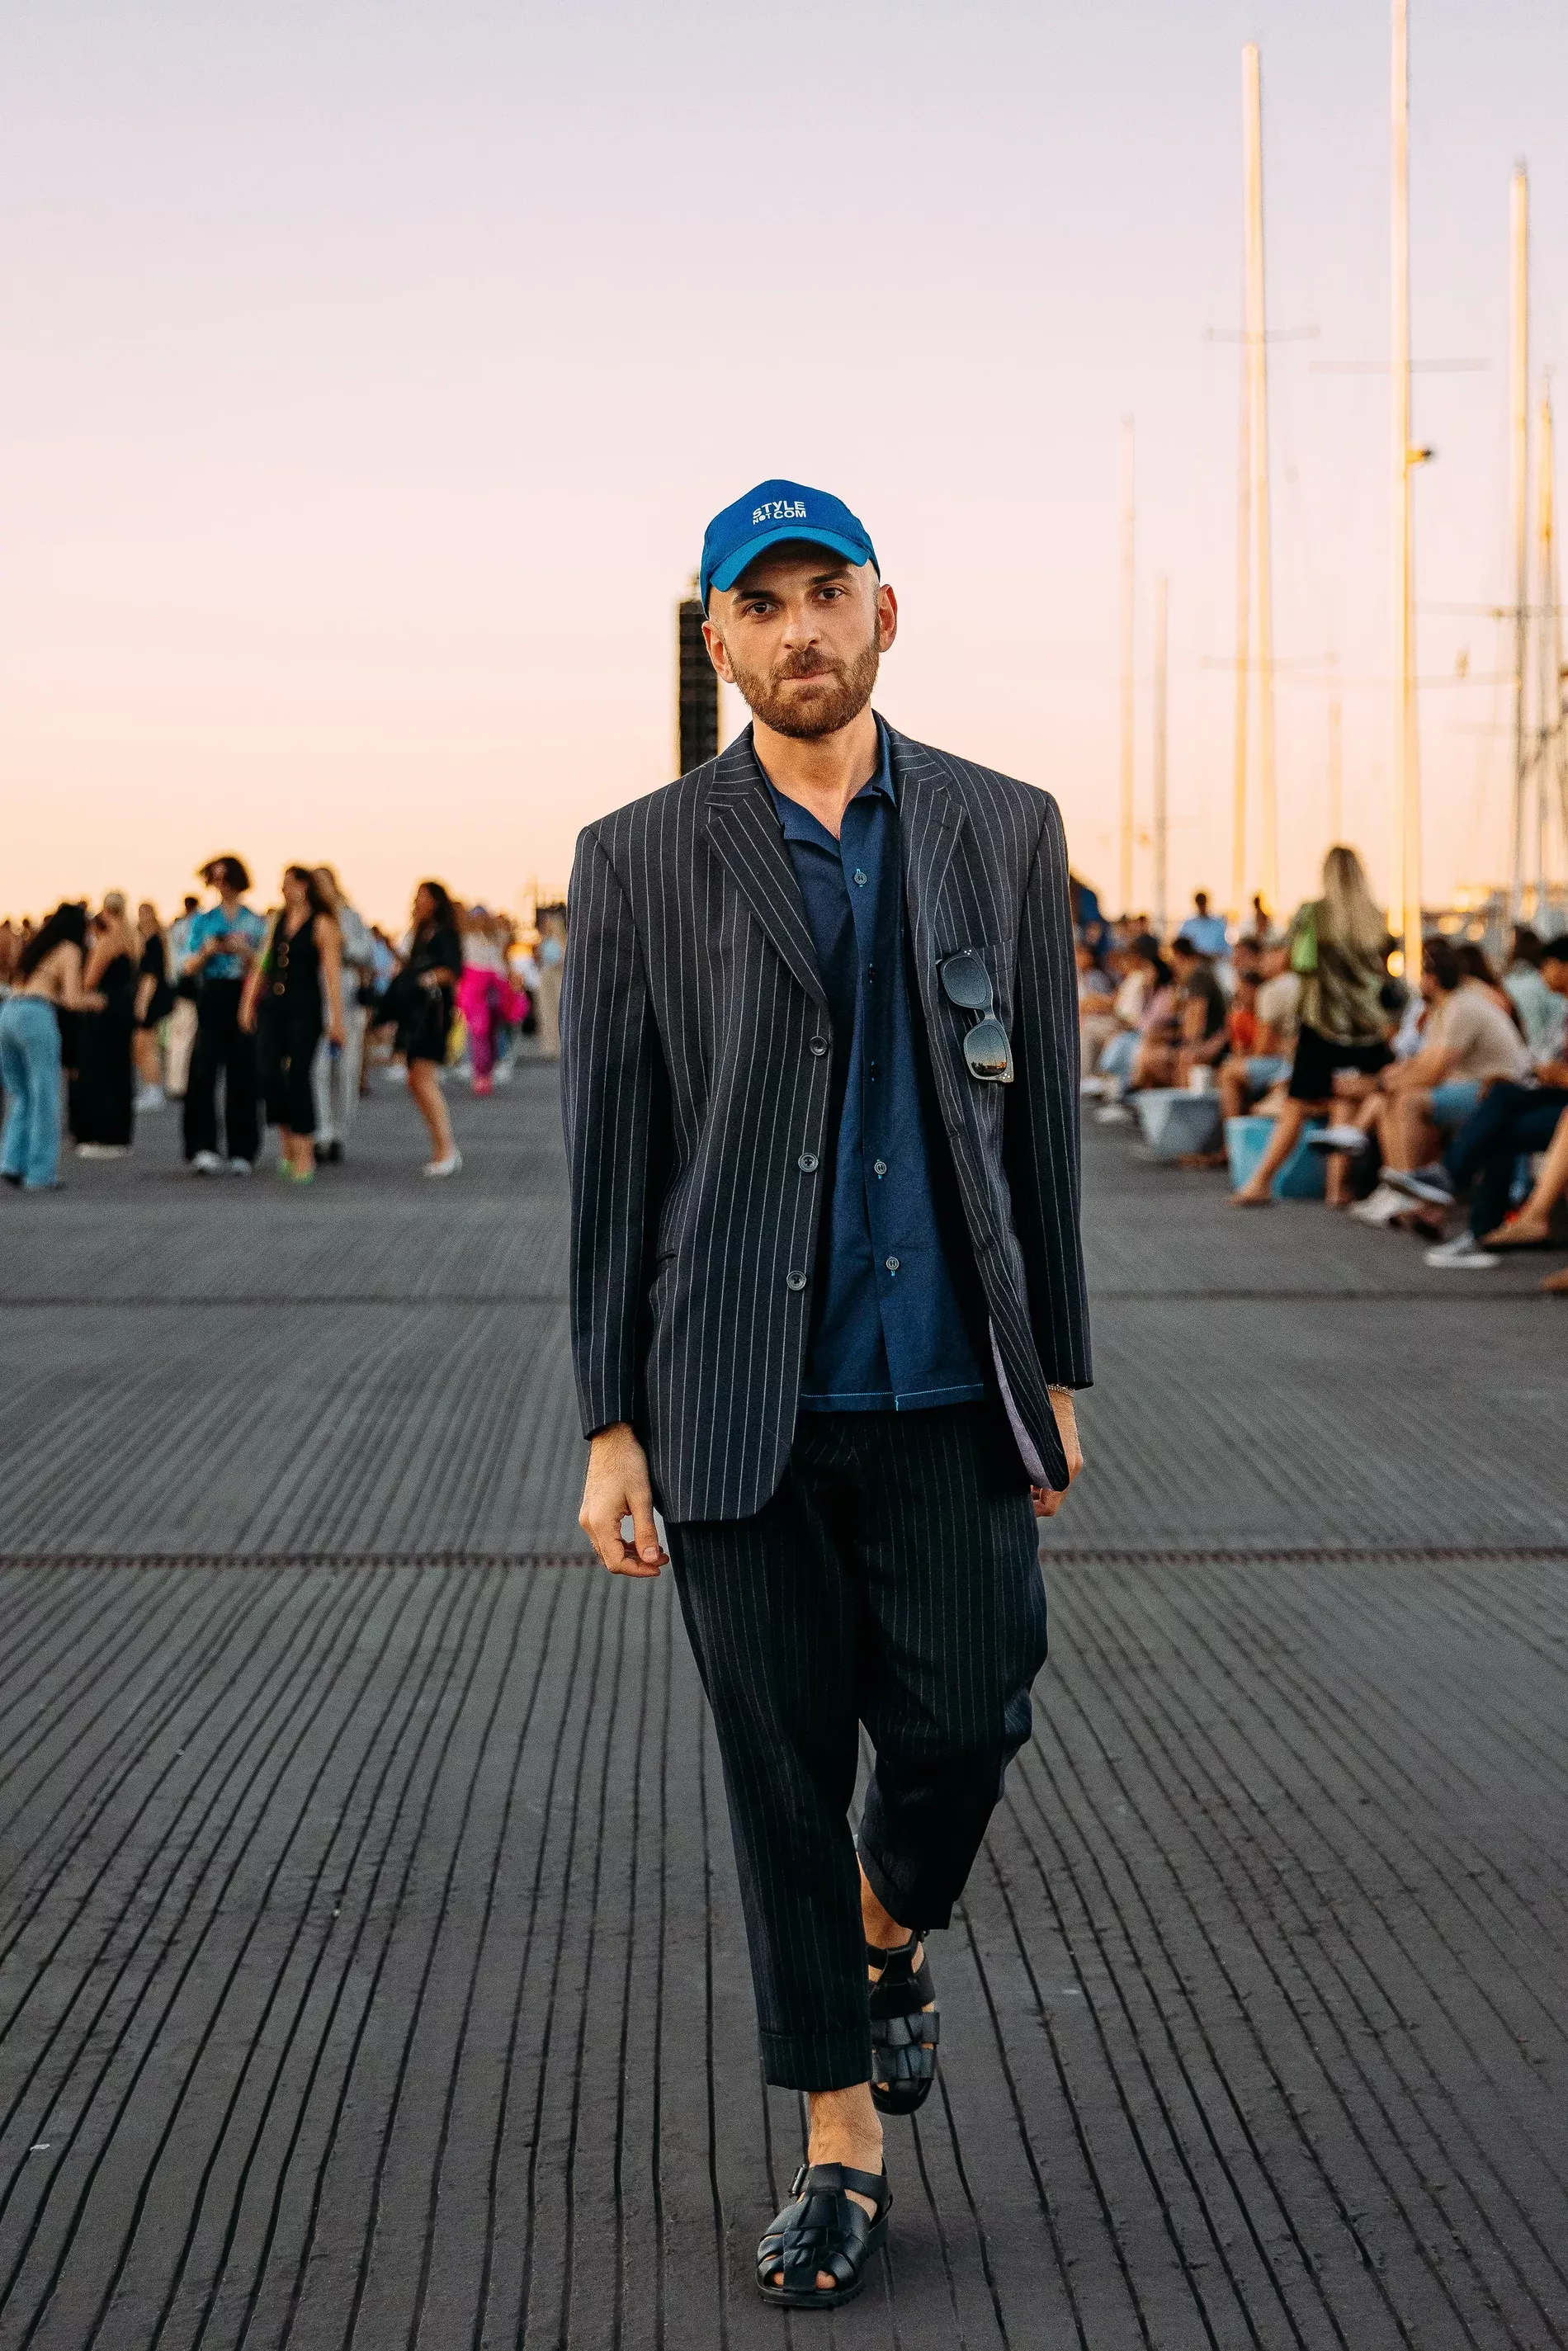 Copenhagen Fashion Week guest wears pinstripe blazer and pants with dark blue shirt